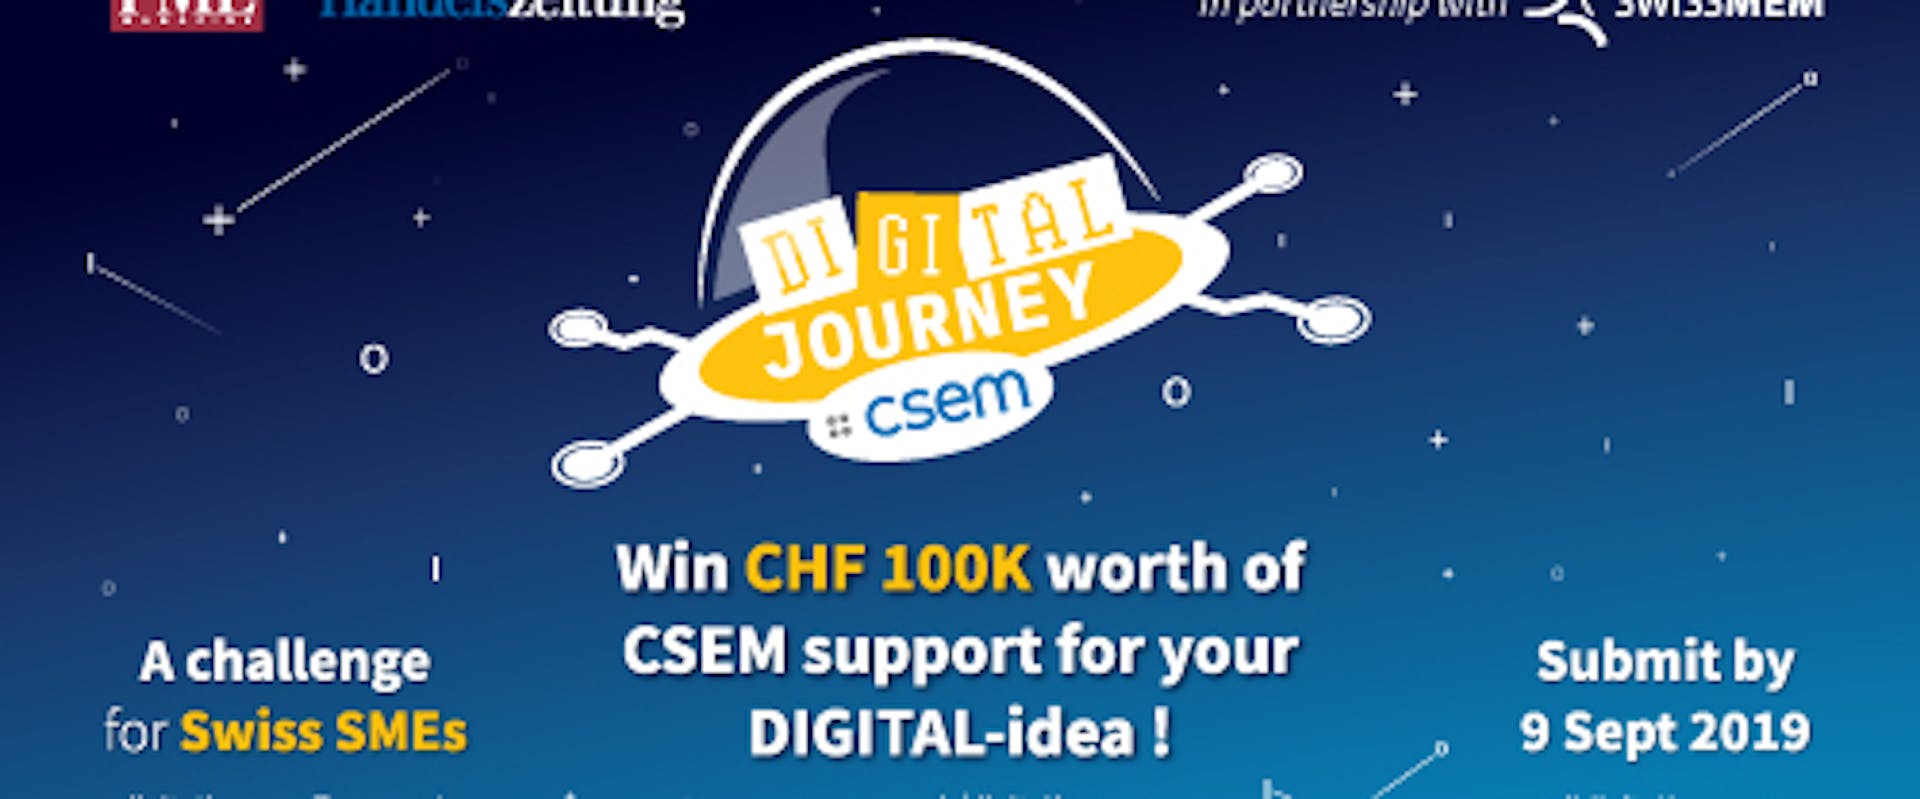 Banner CSEM Digital Journey 2018